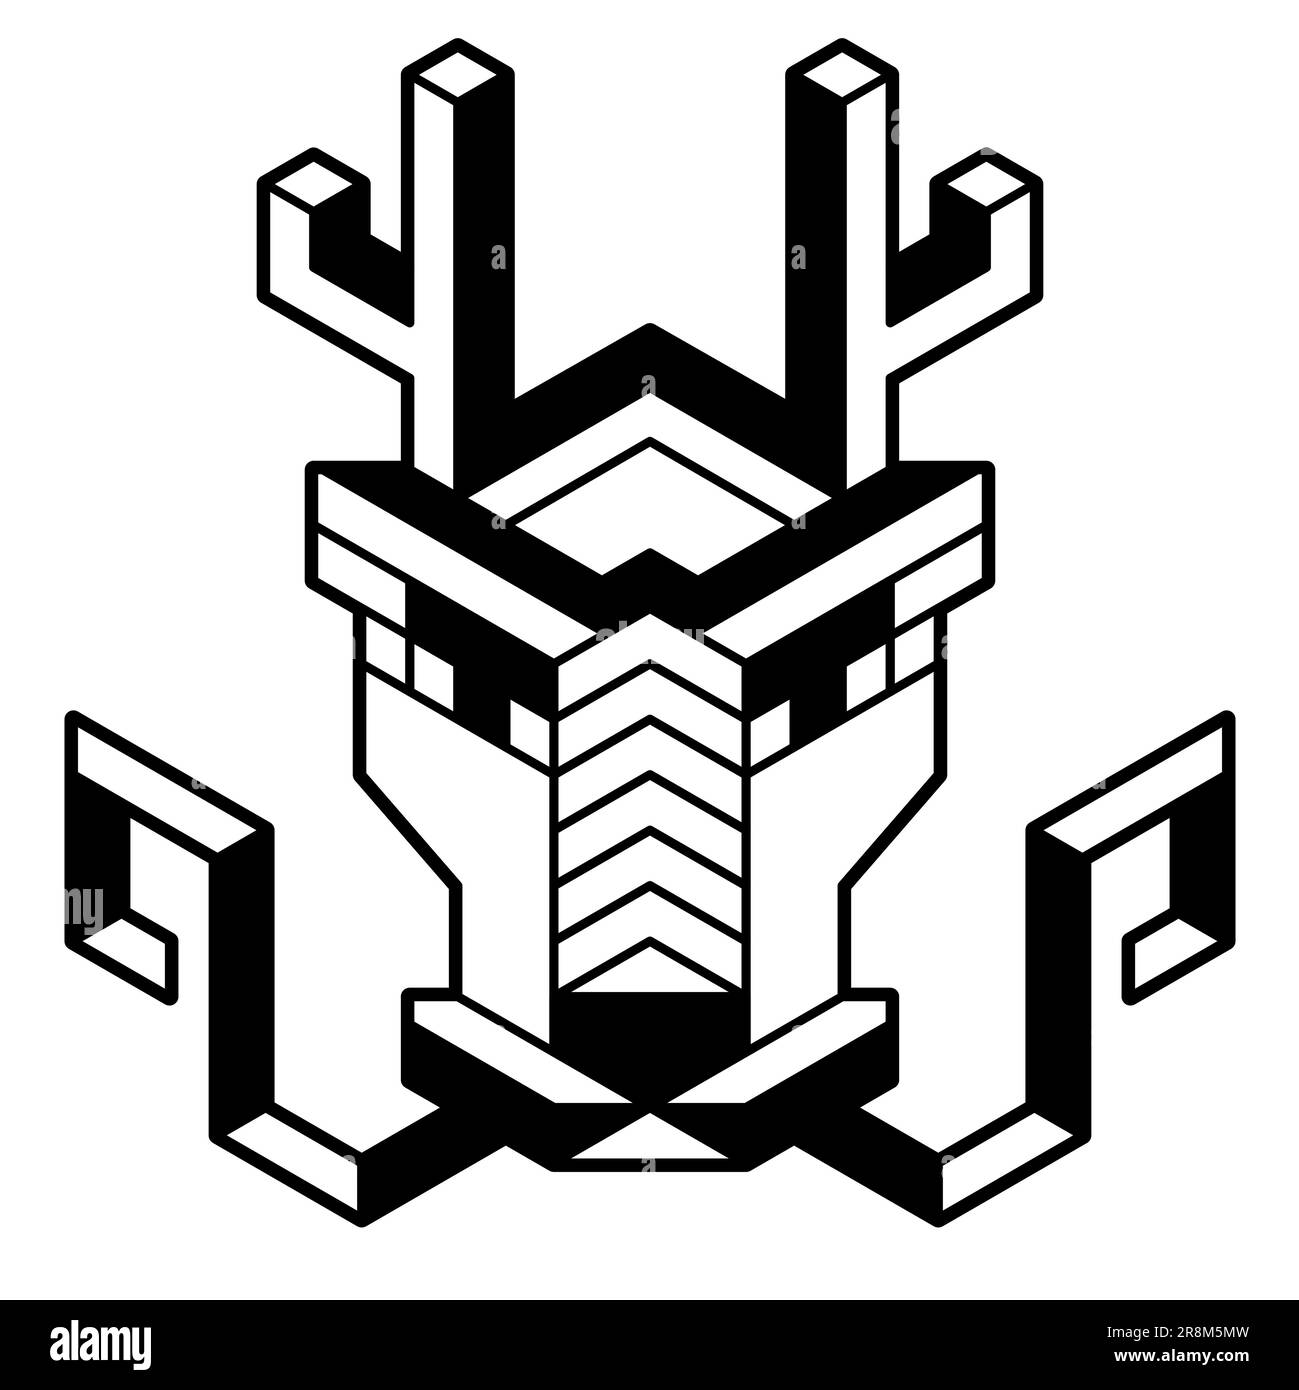 Stylized geometric chinese dragon head. Simple and minimalistic polygonal style. Tattoo design, logo art, vector illustration. Stock Vector